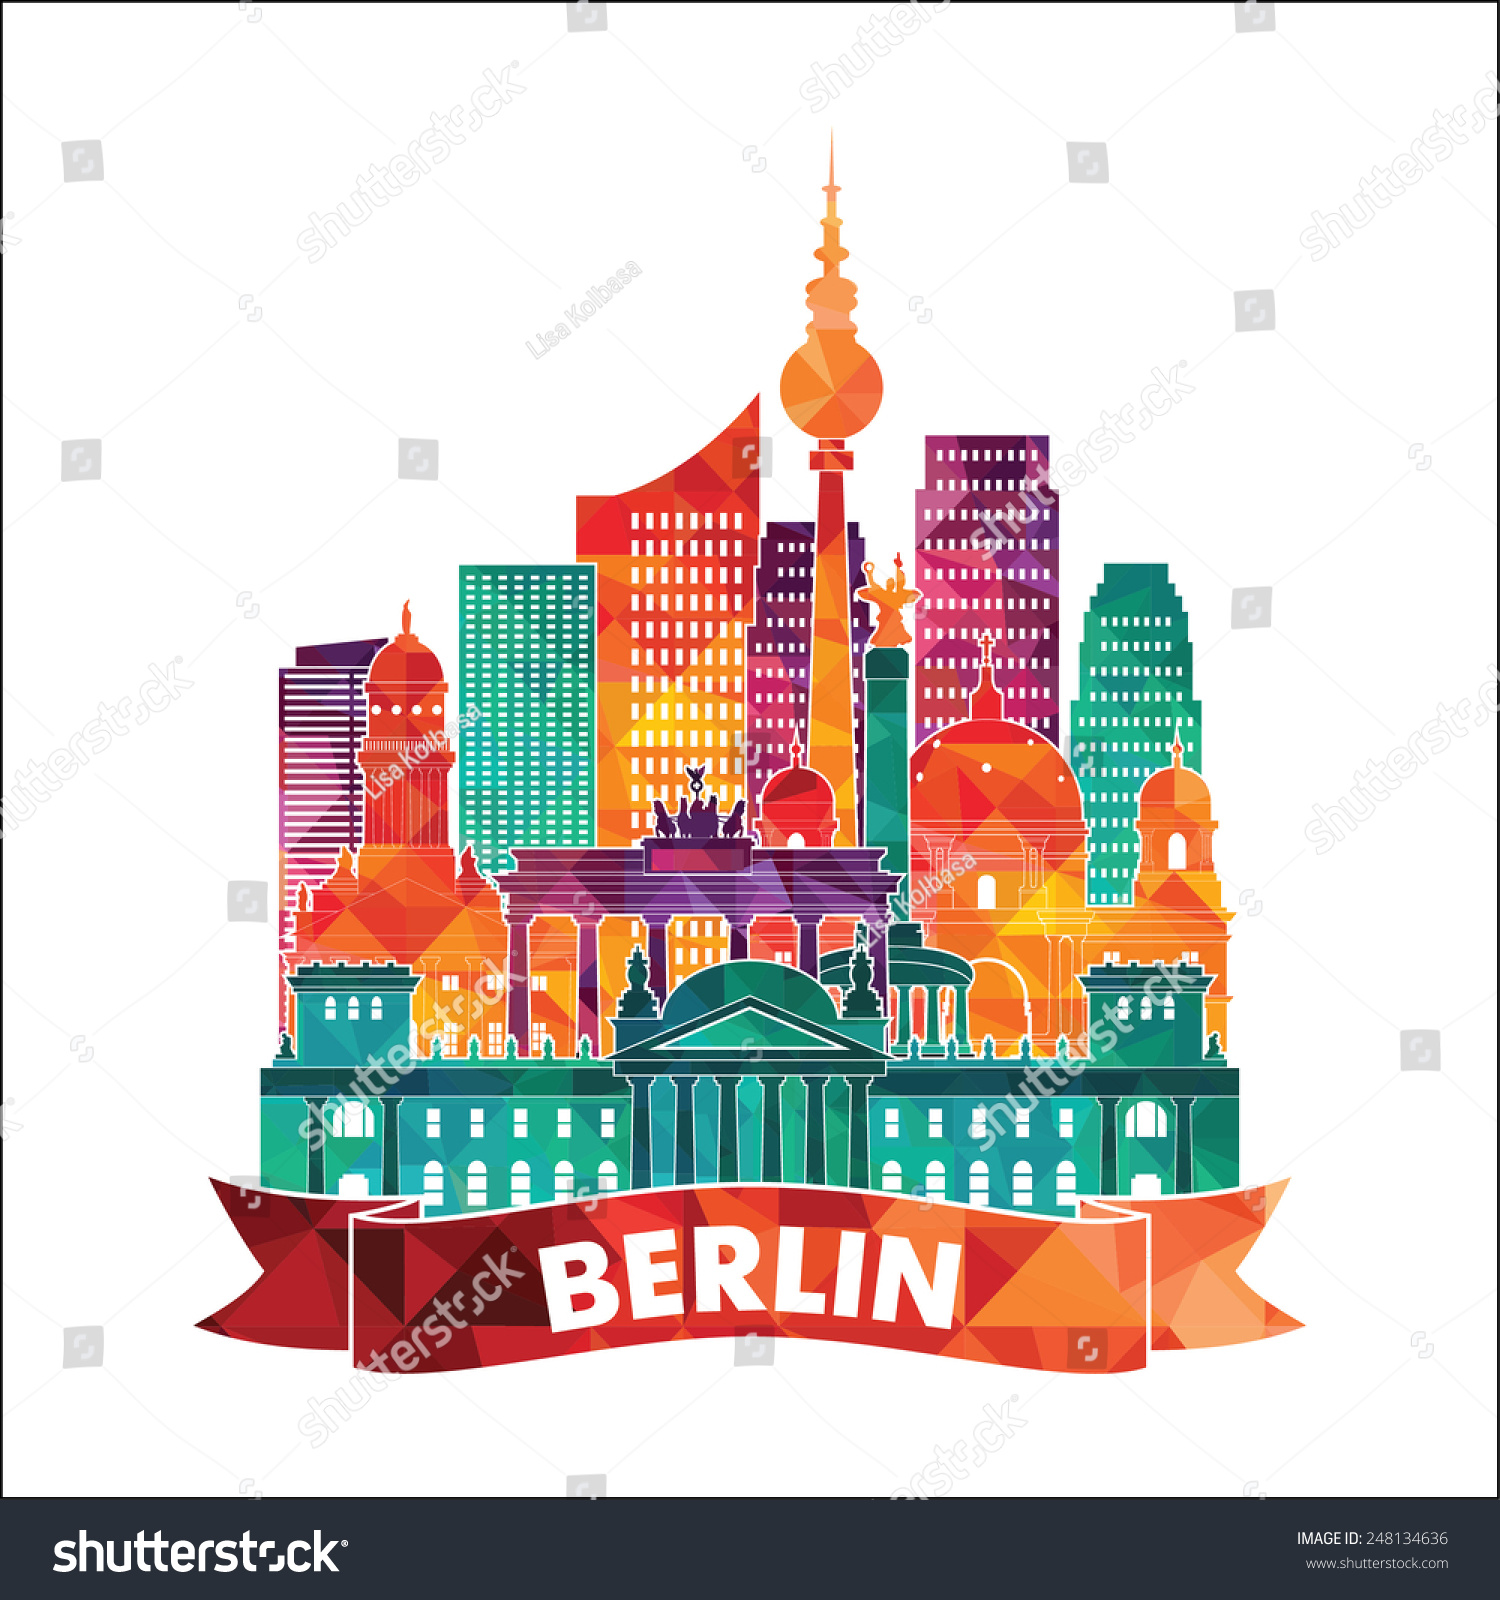 Берлин иллюстрация